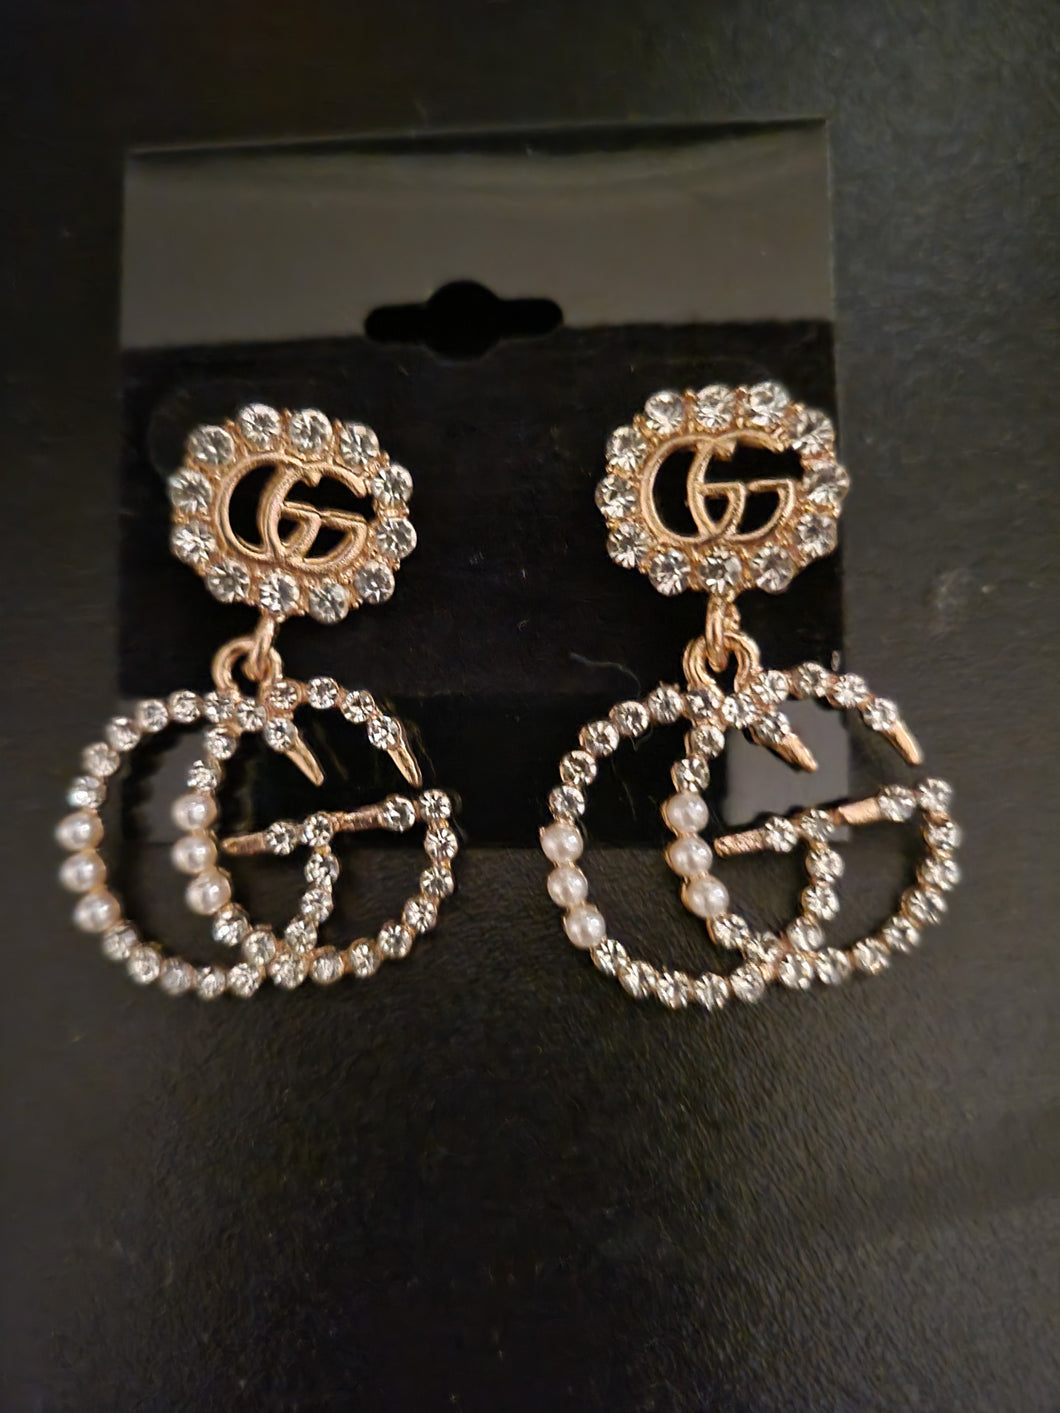 GG inspired pearl/rhinestone earrings